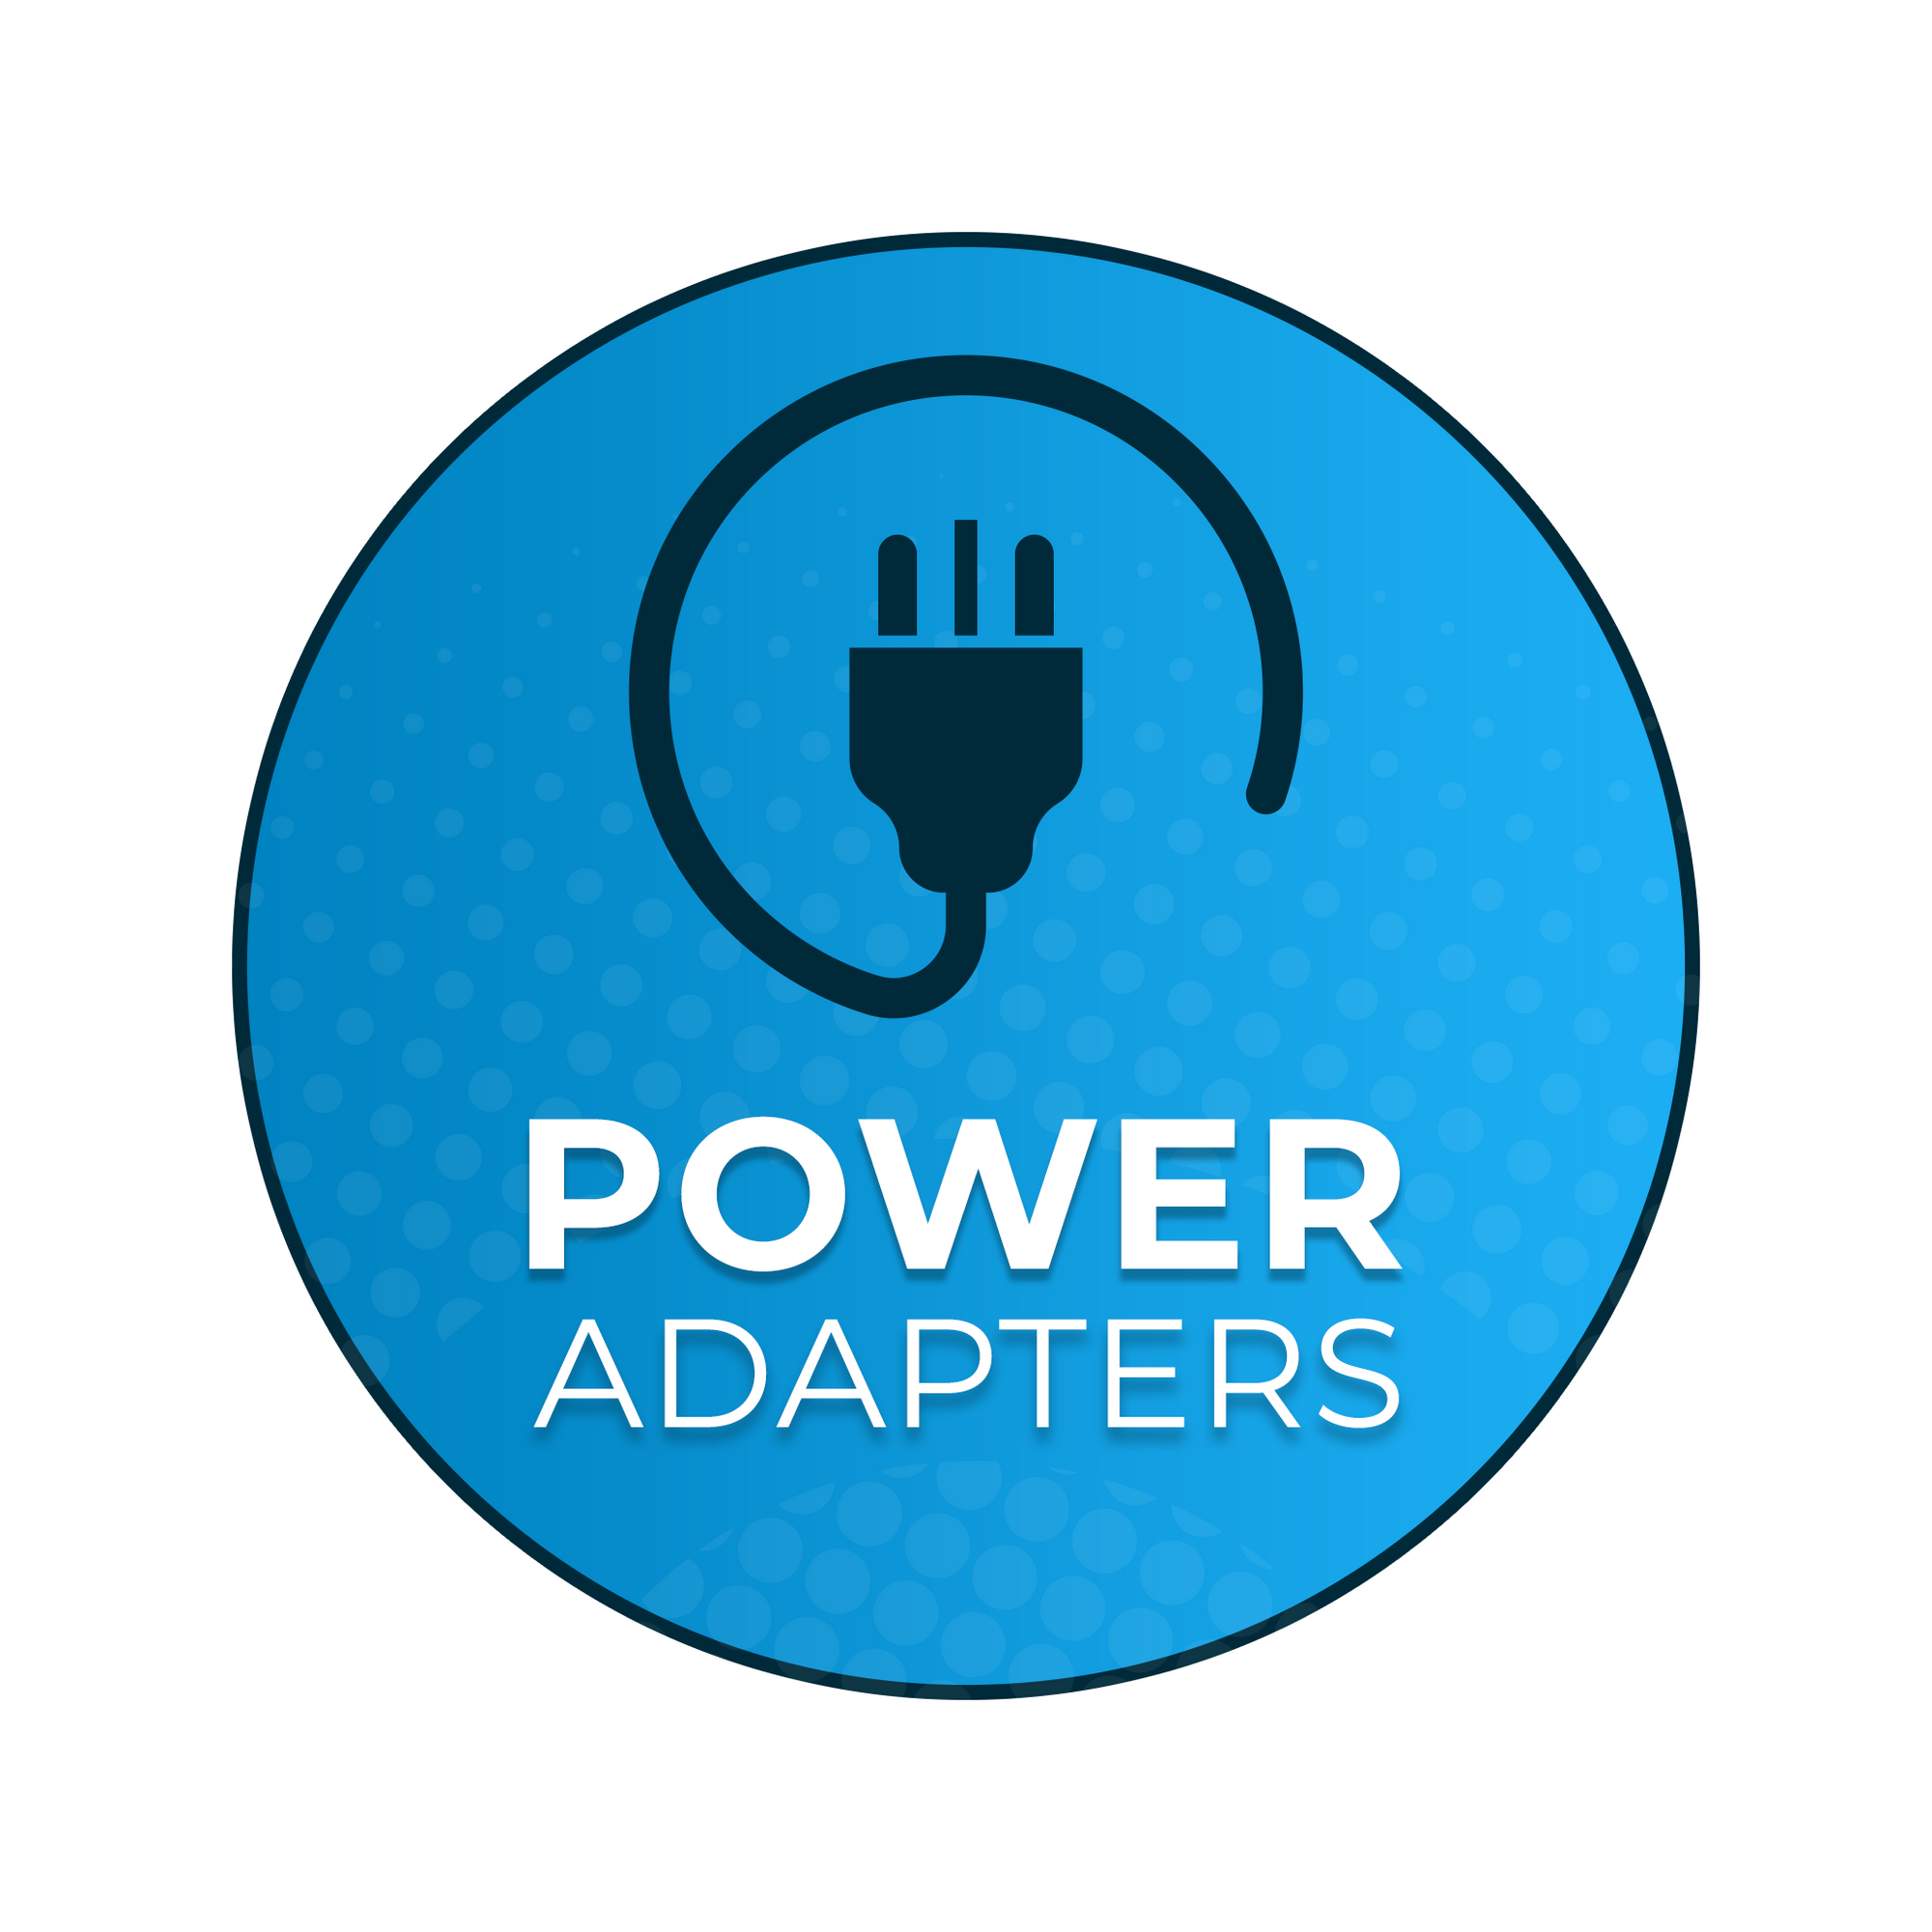 UK Power Adapter: Sport-s